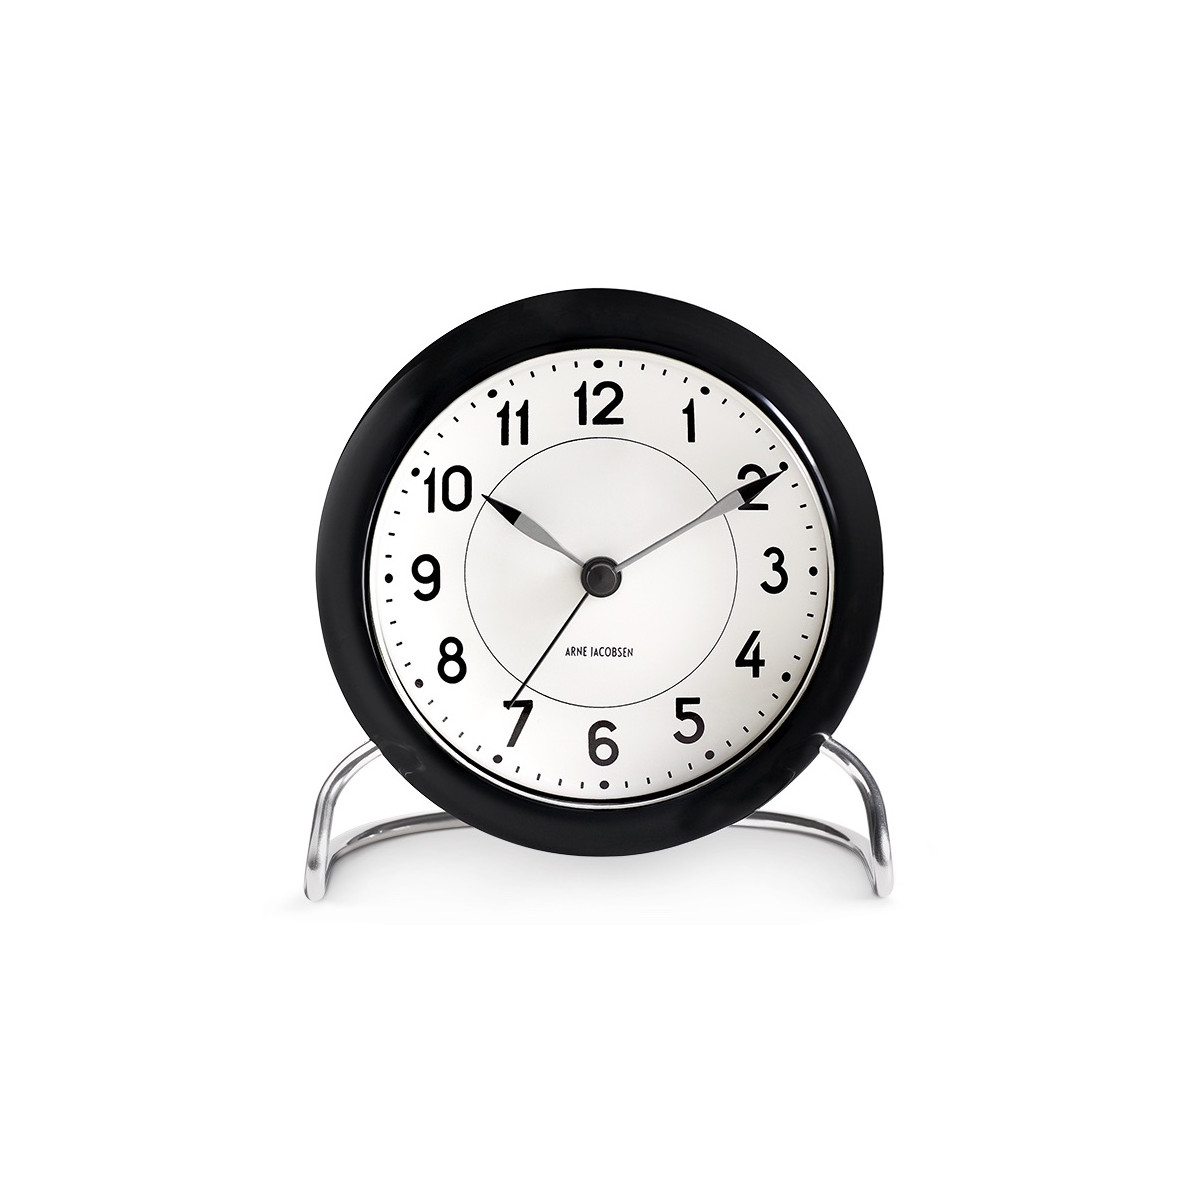 AJ Station alarm clock - black - Arne Jacobsen